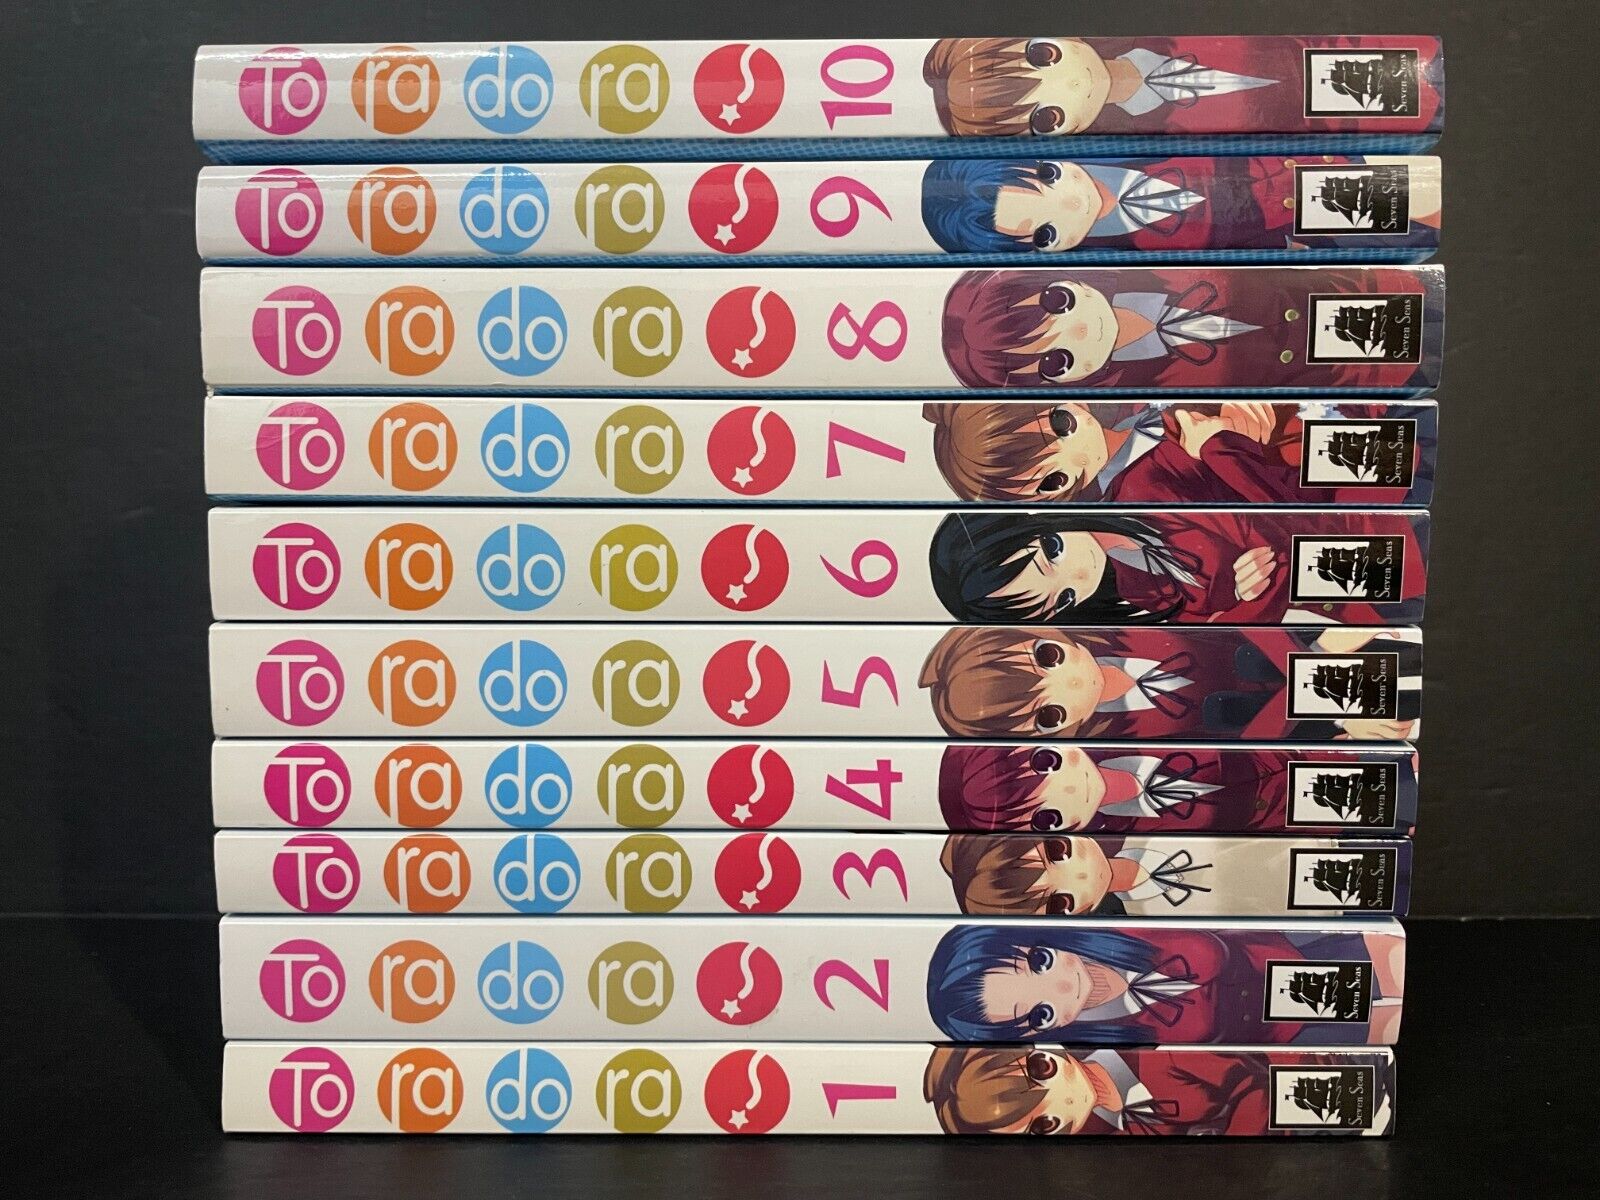 Toradora Light Novel Volumes 1-10 Brand New Complete Set in English